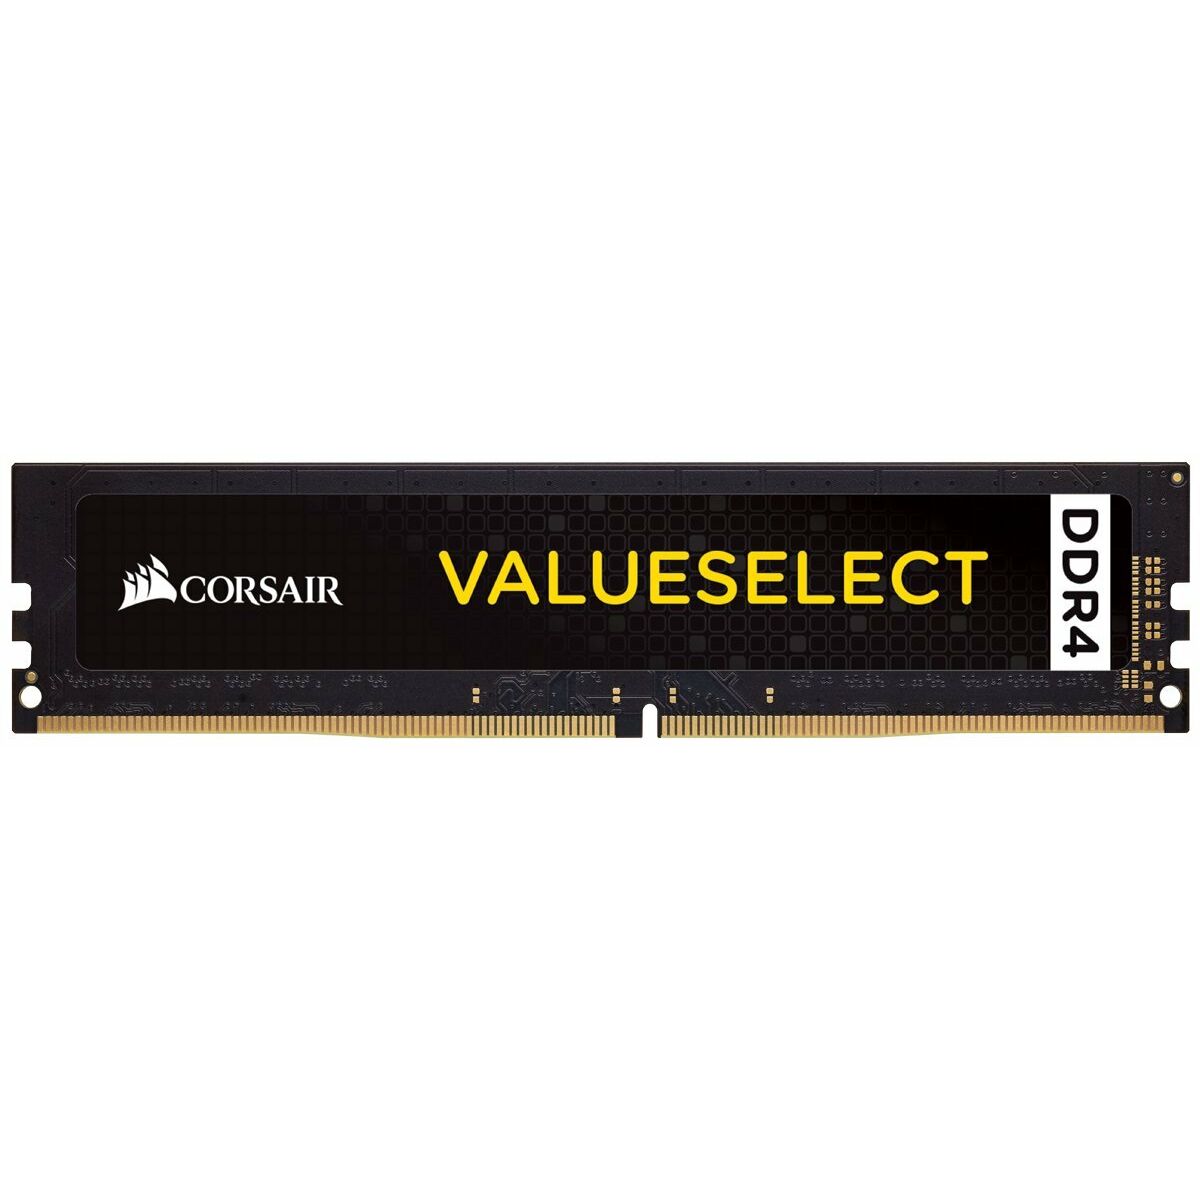 RAM Memory Corsair 8GB, DDR4, 2400MHz 2400 MHz CL16 8 GB-1